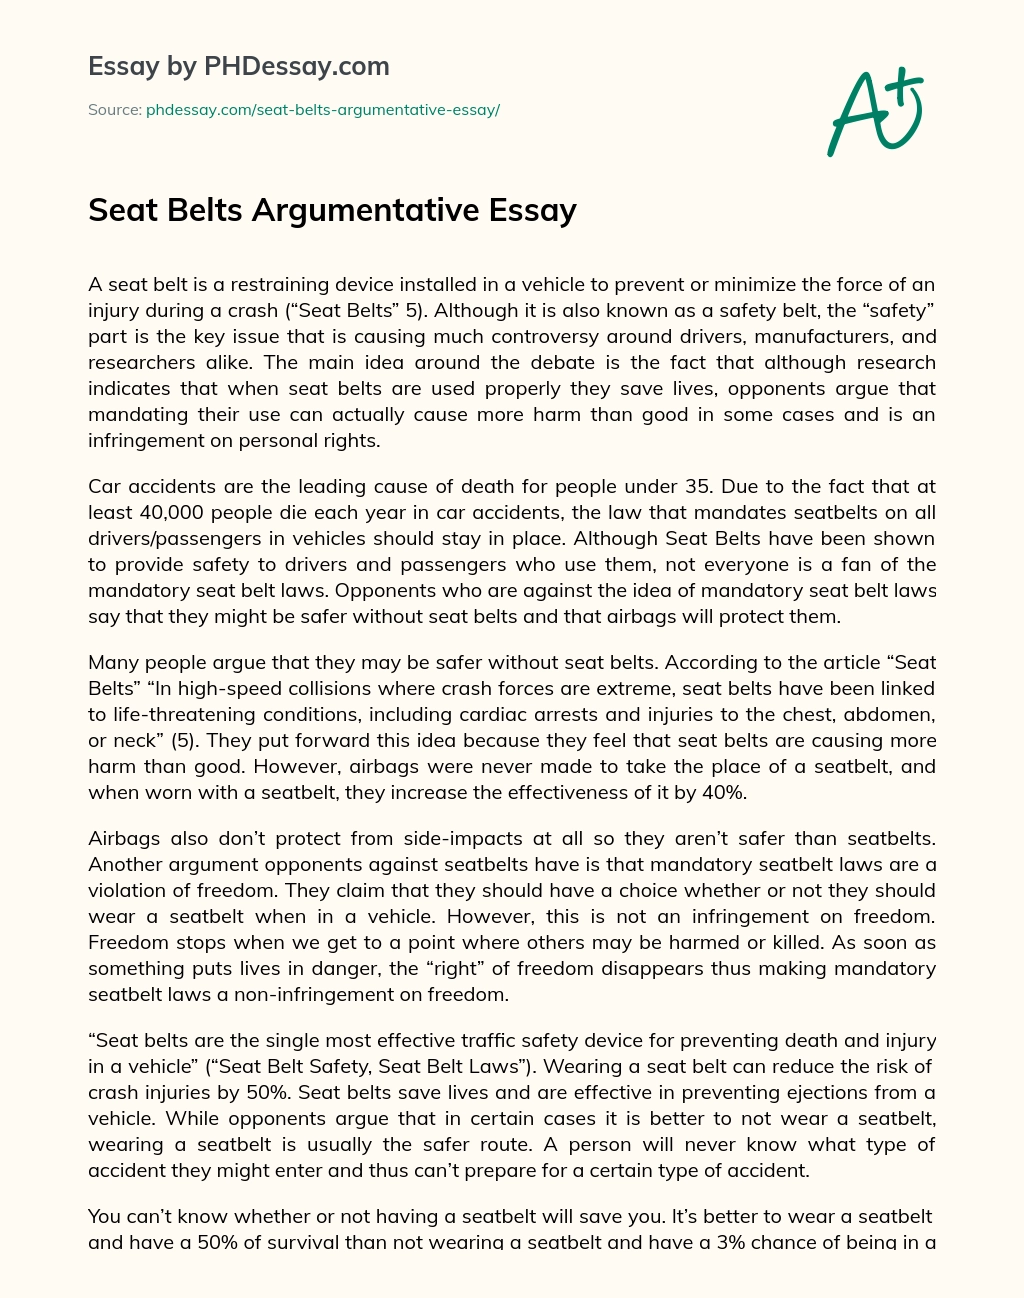 Seat Belts Argumentative Essay essay